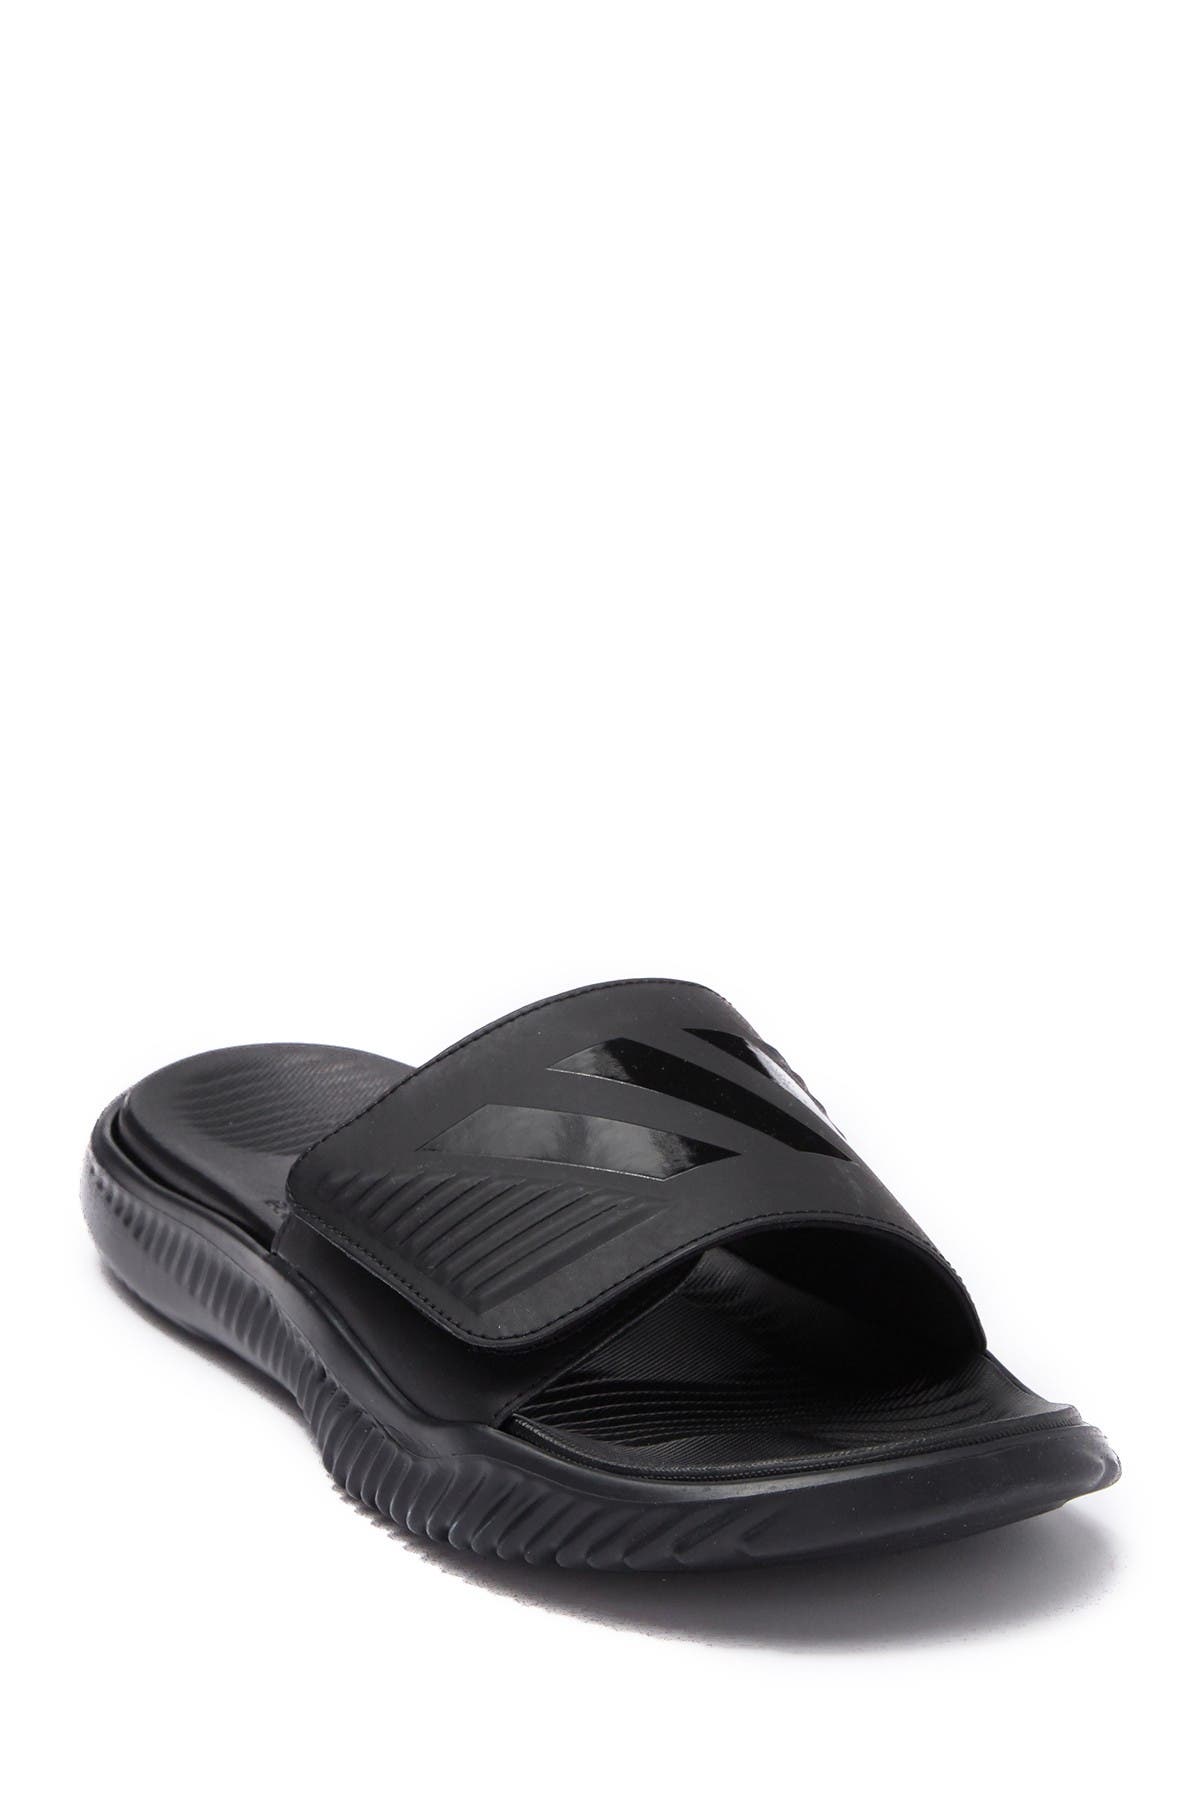 adidas | Alphabounce Slide Sandal 